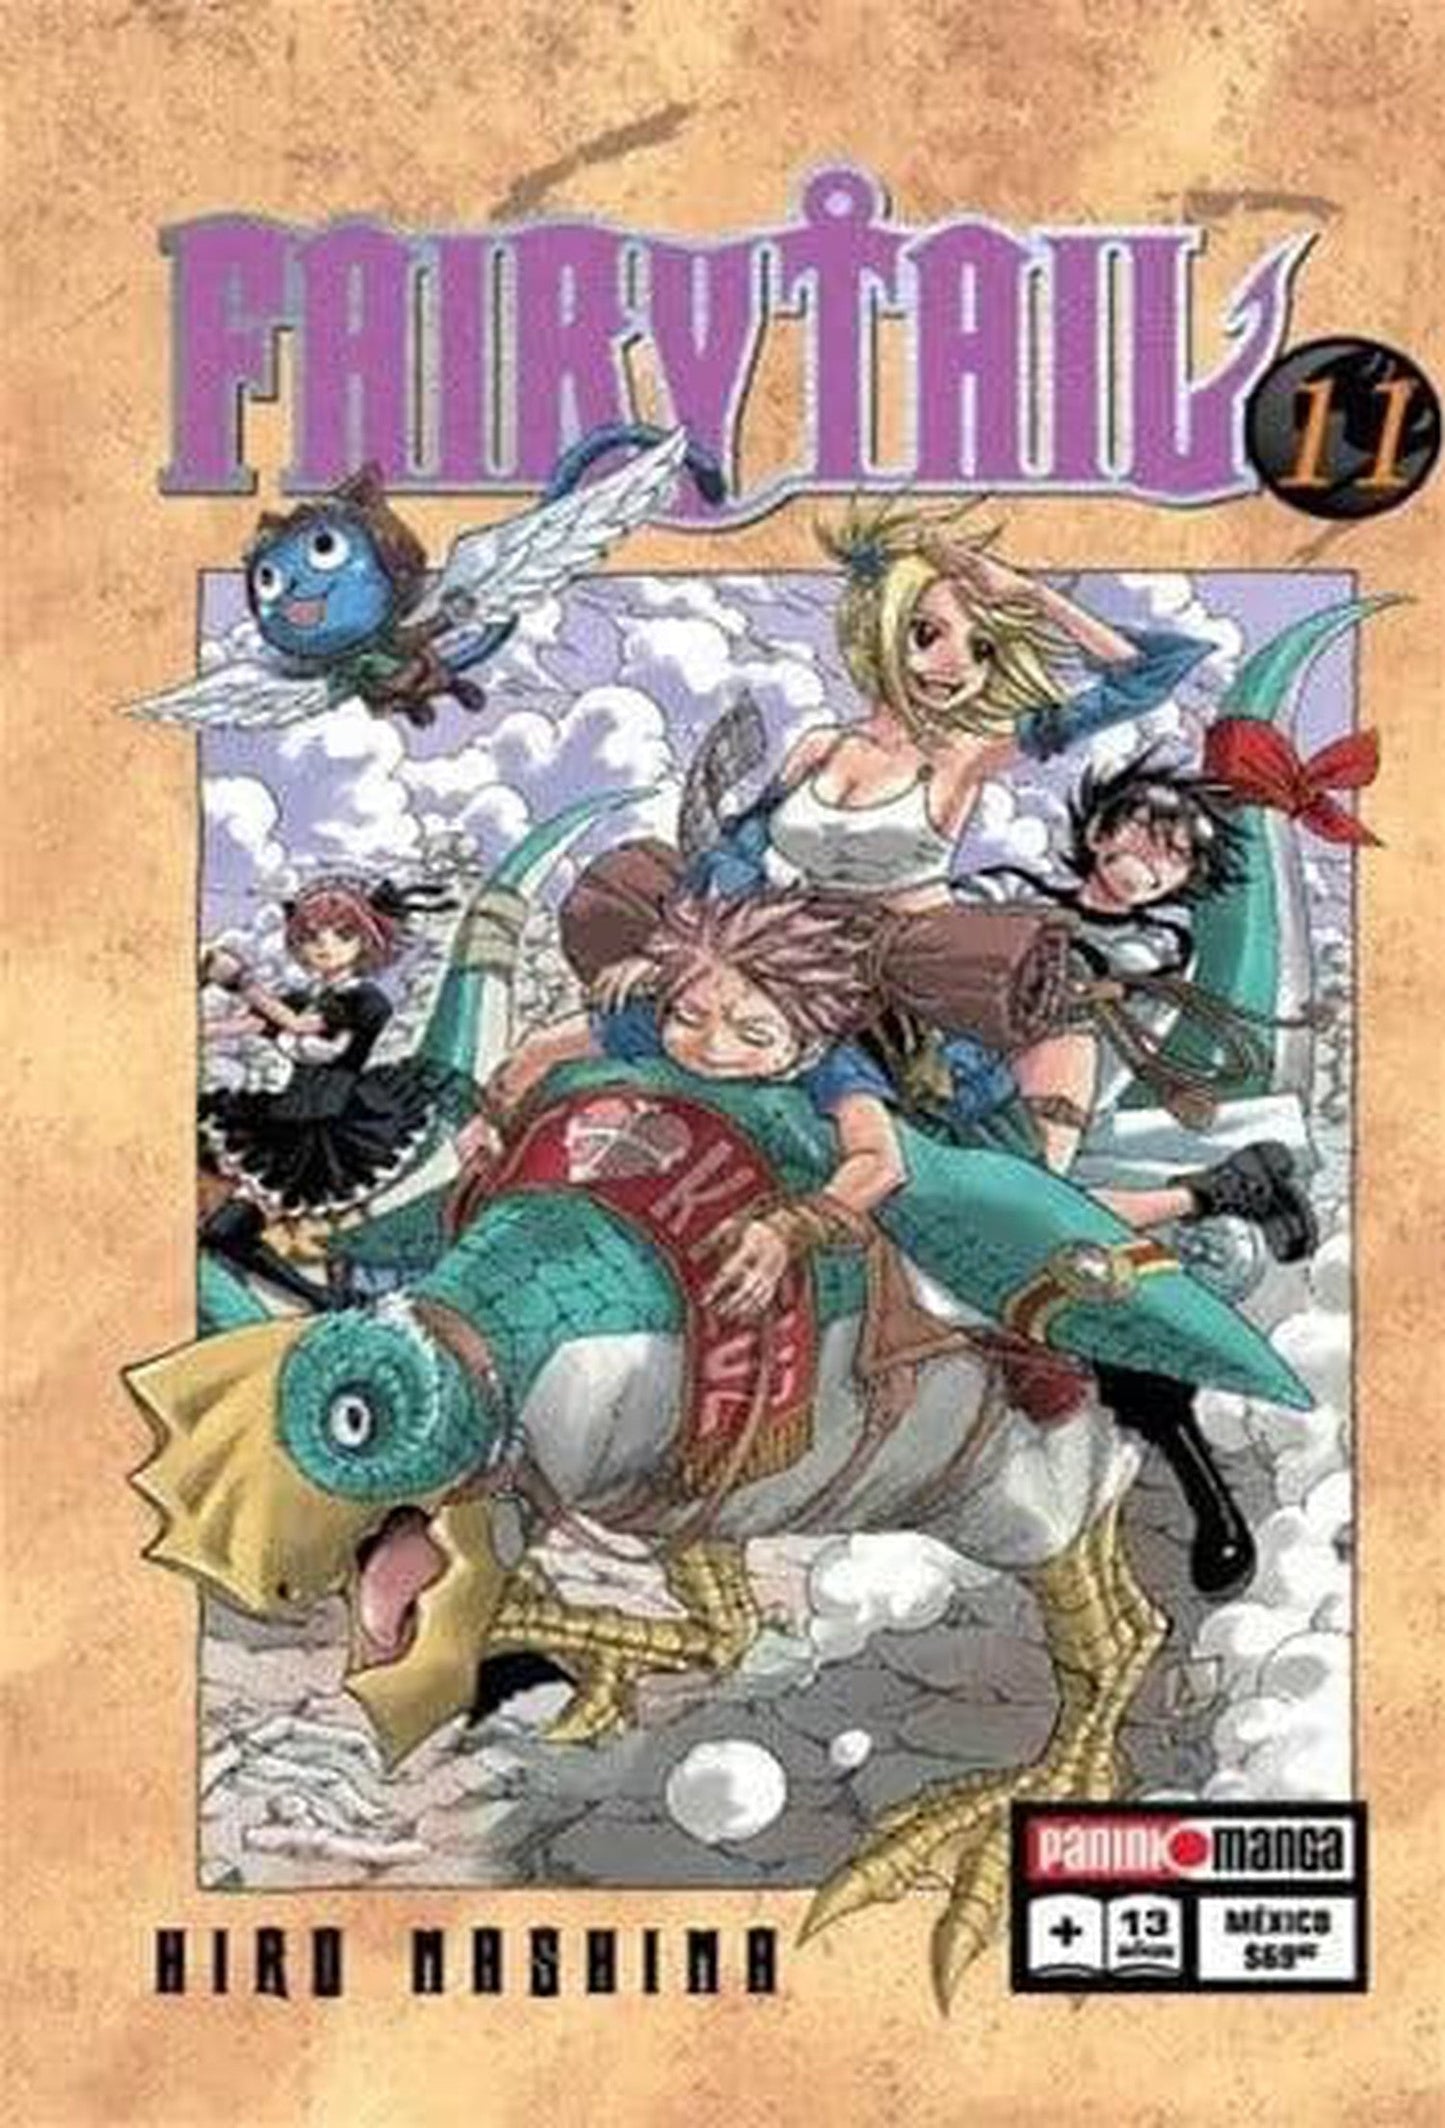 Fairy Tail - #11 Panini México ENcuadrocomics